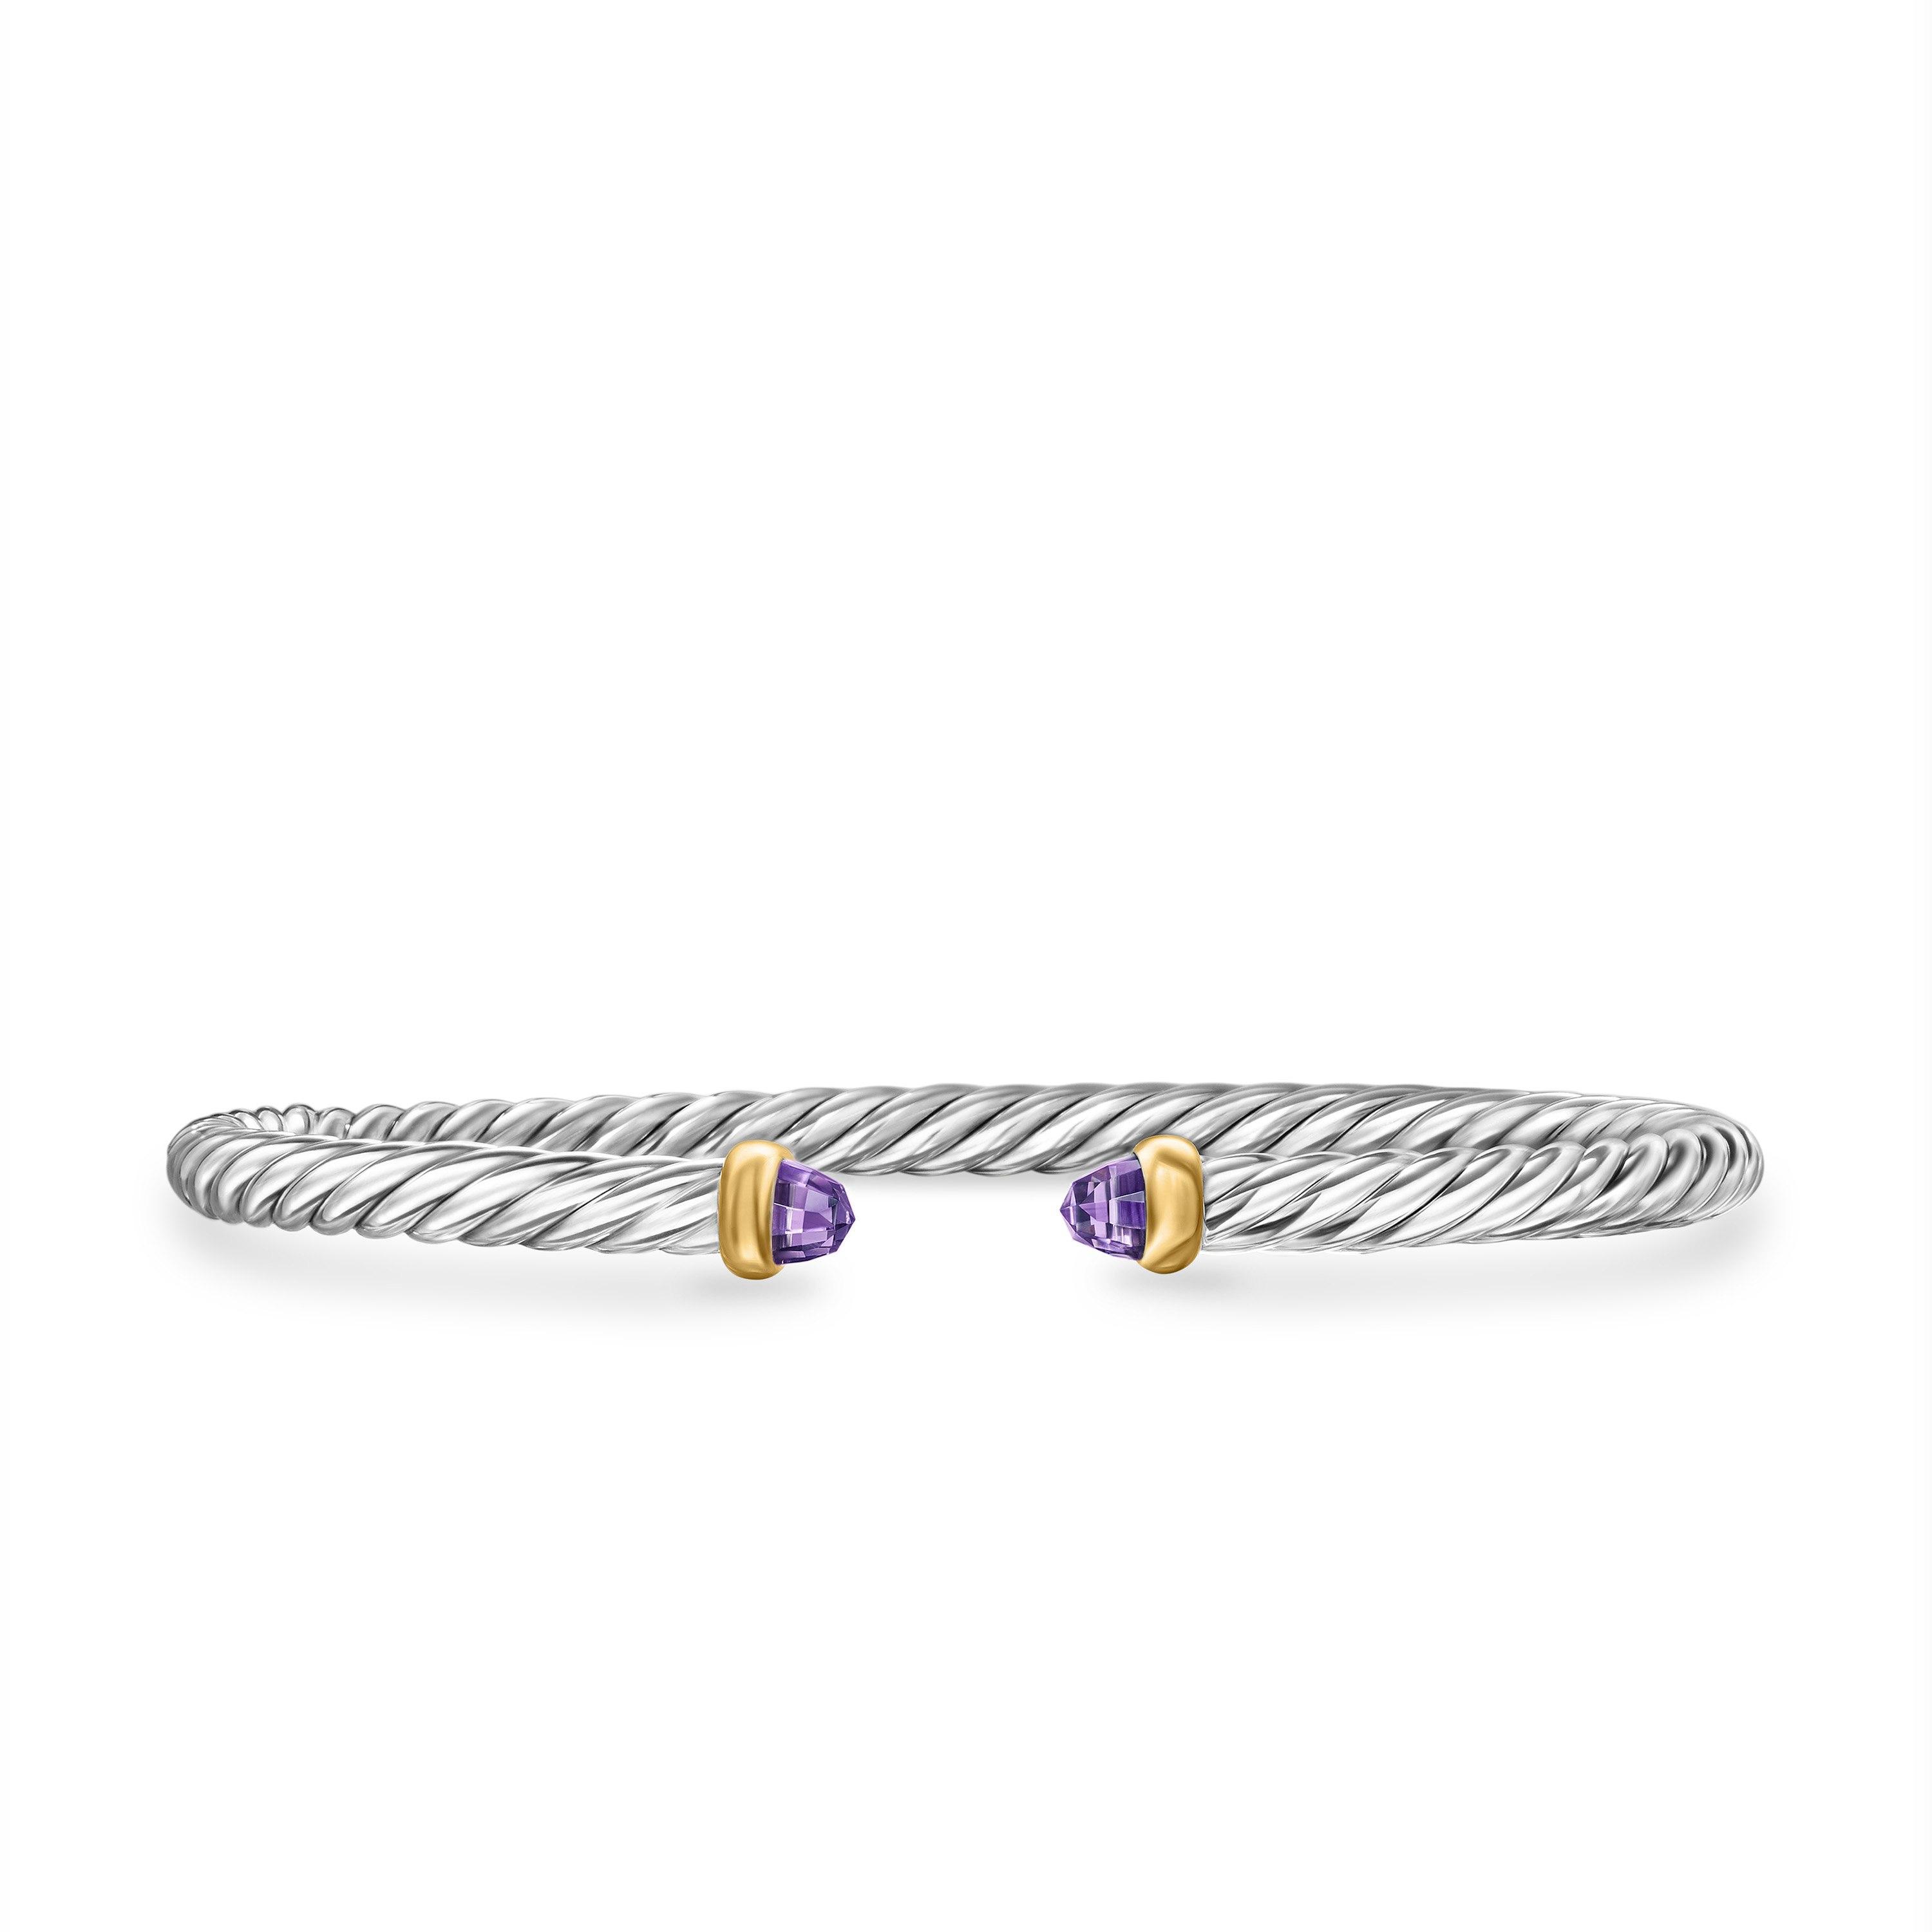 David Yurman Cable Flex Sterling Silver Bracelet with Amethyst, Size Large 0